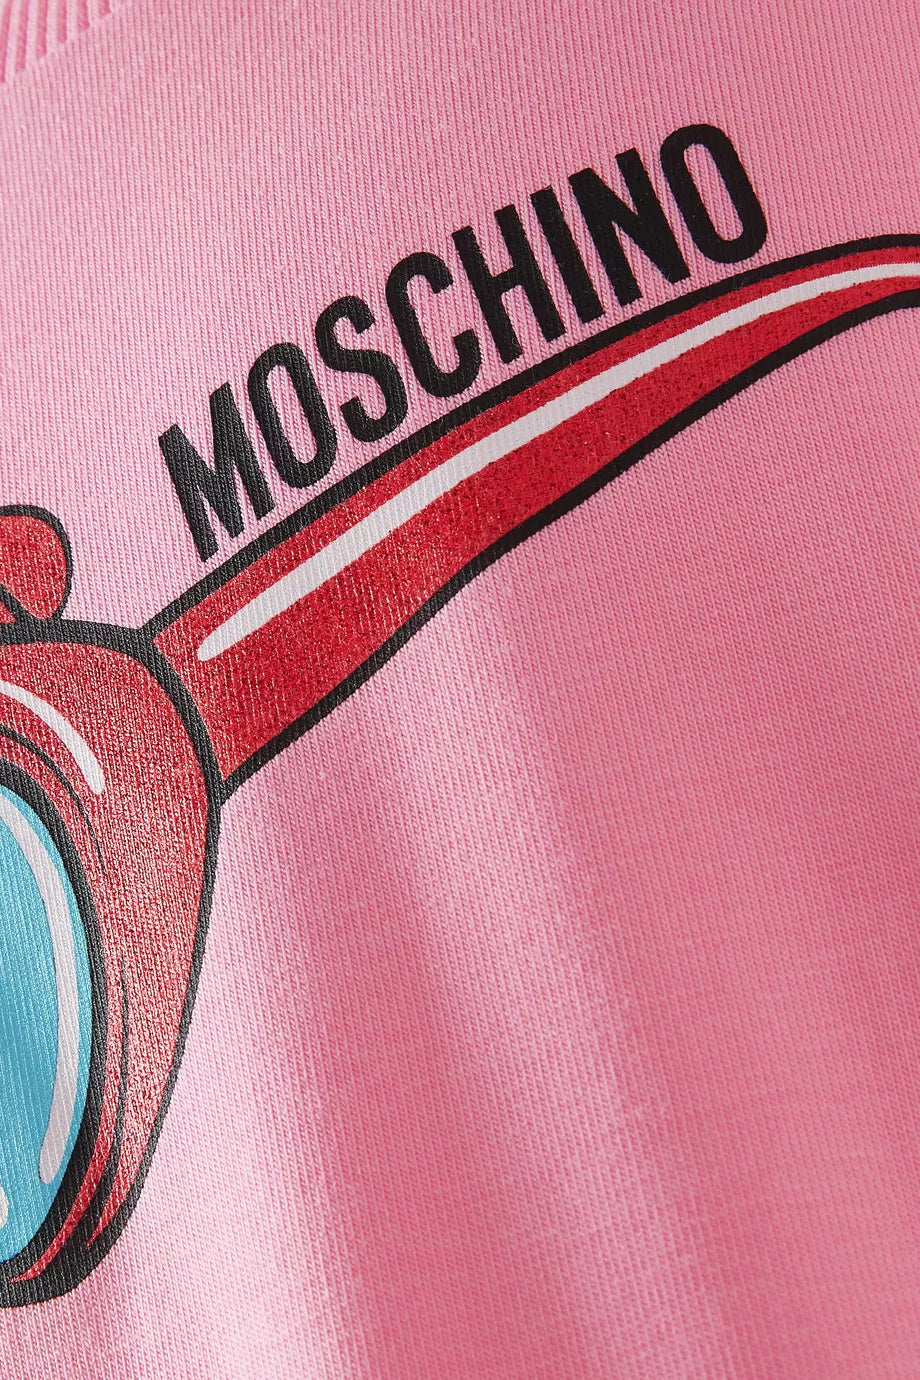 Moschino Pink Teired Sunglasses Graphic Dress